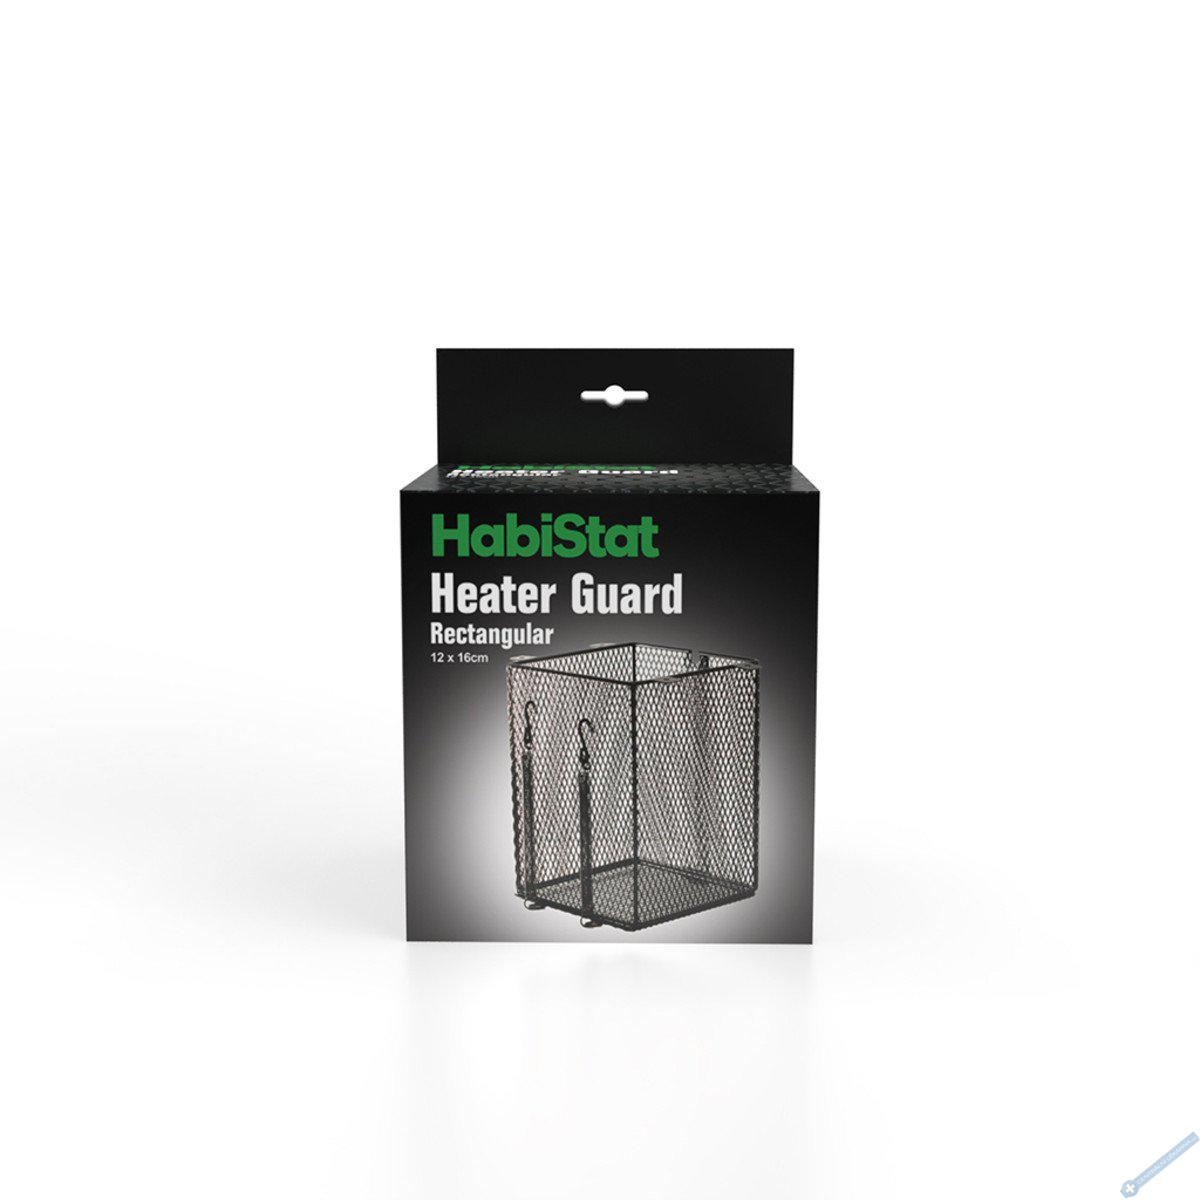 HabiStat Heater Guard 12x16cm